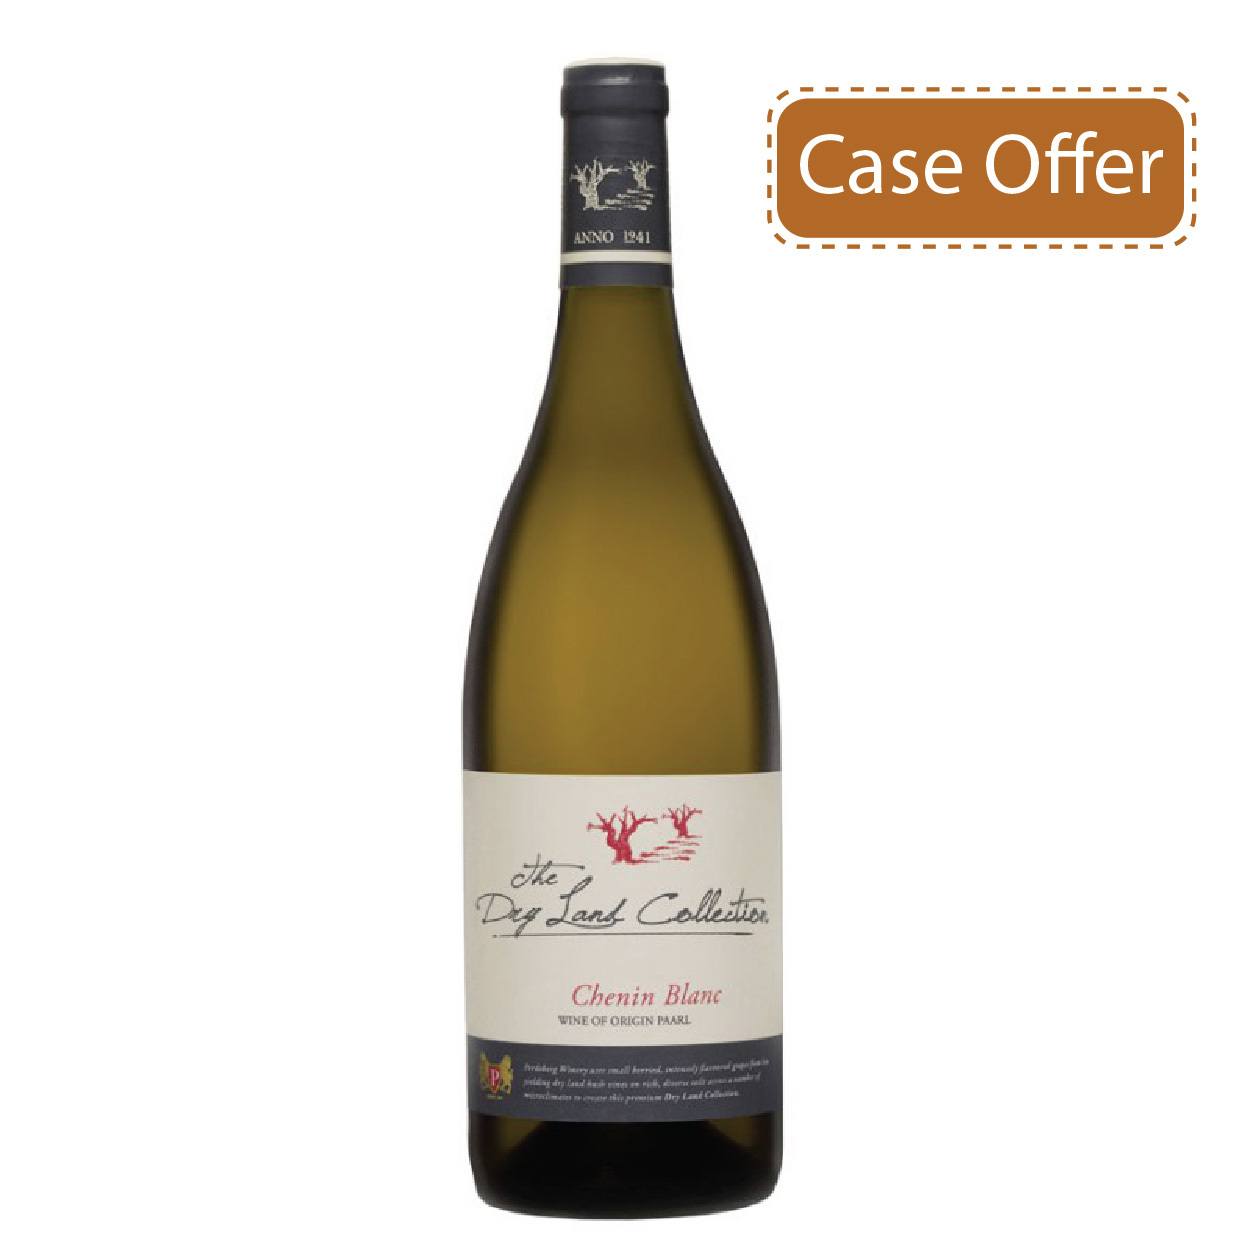 White Wine - Perdeberg Unoaked Chenin Blanc 2017 Case Offer - South Africa*